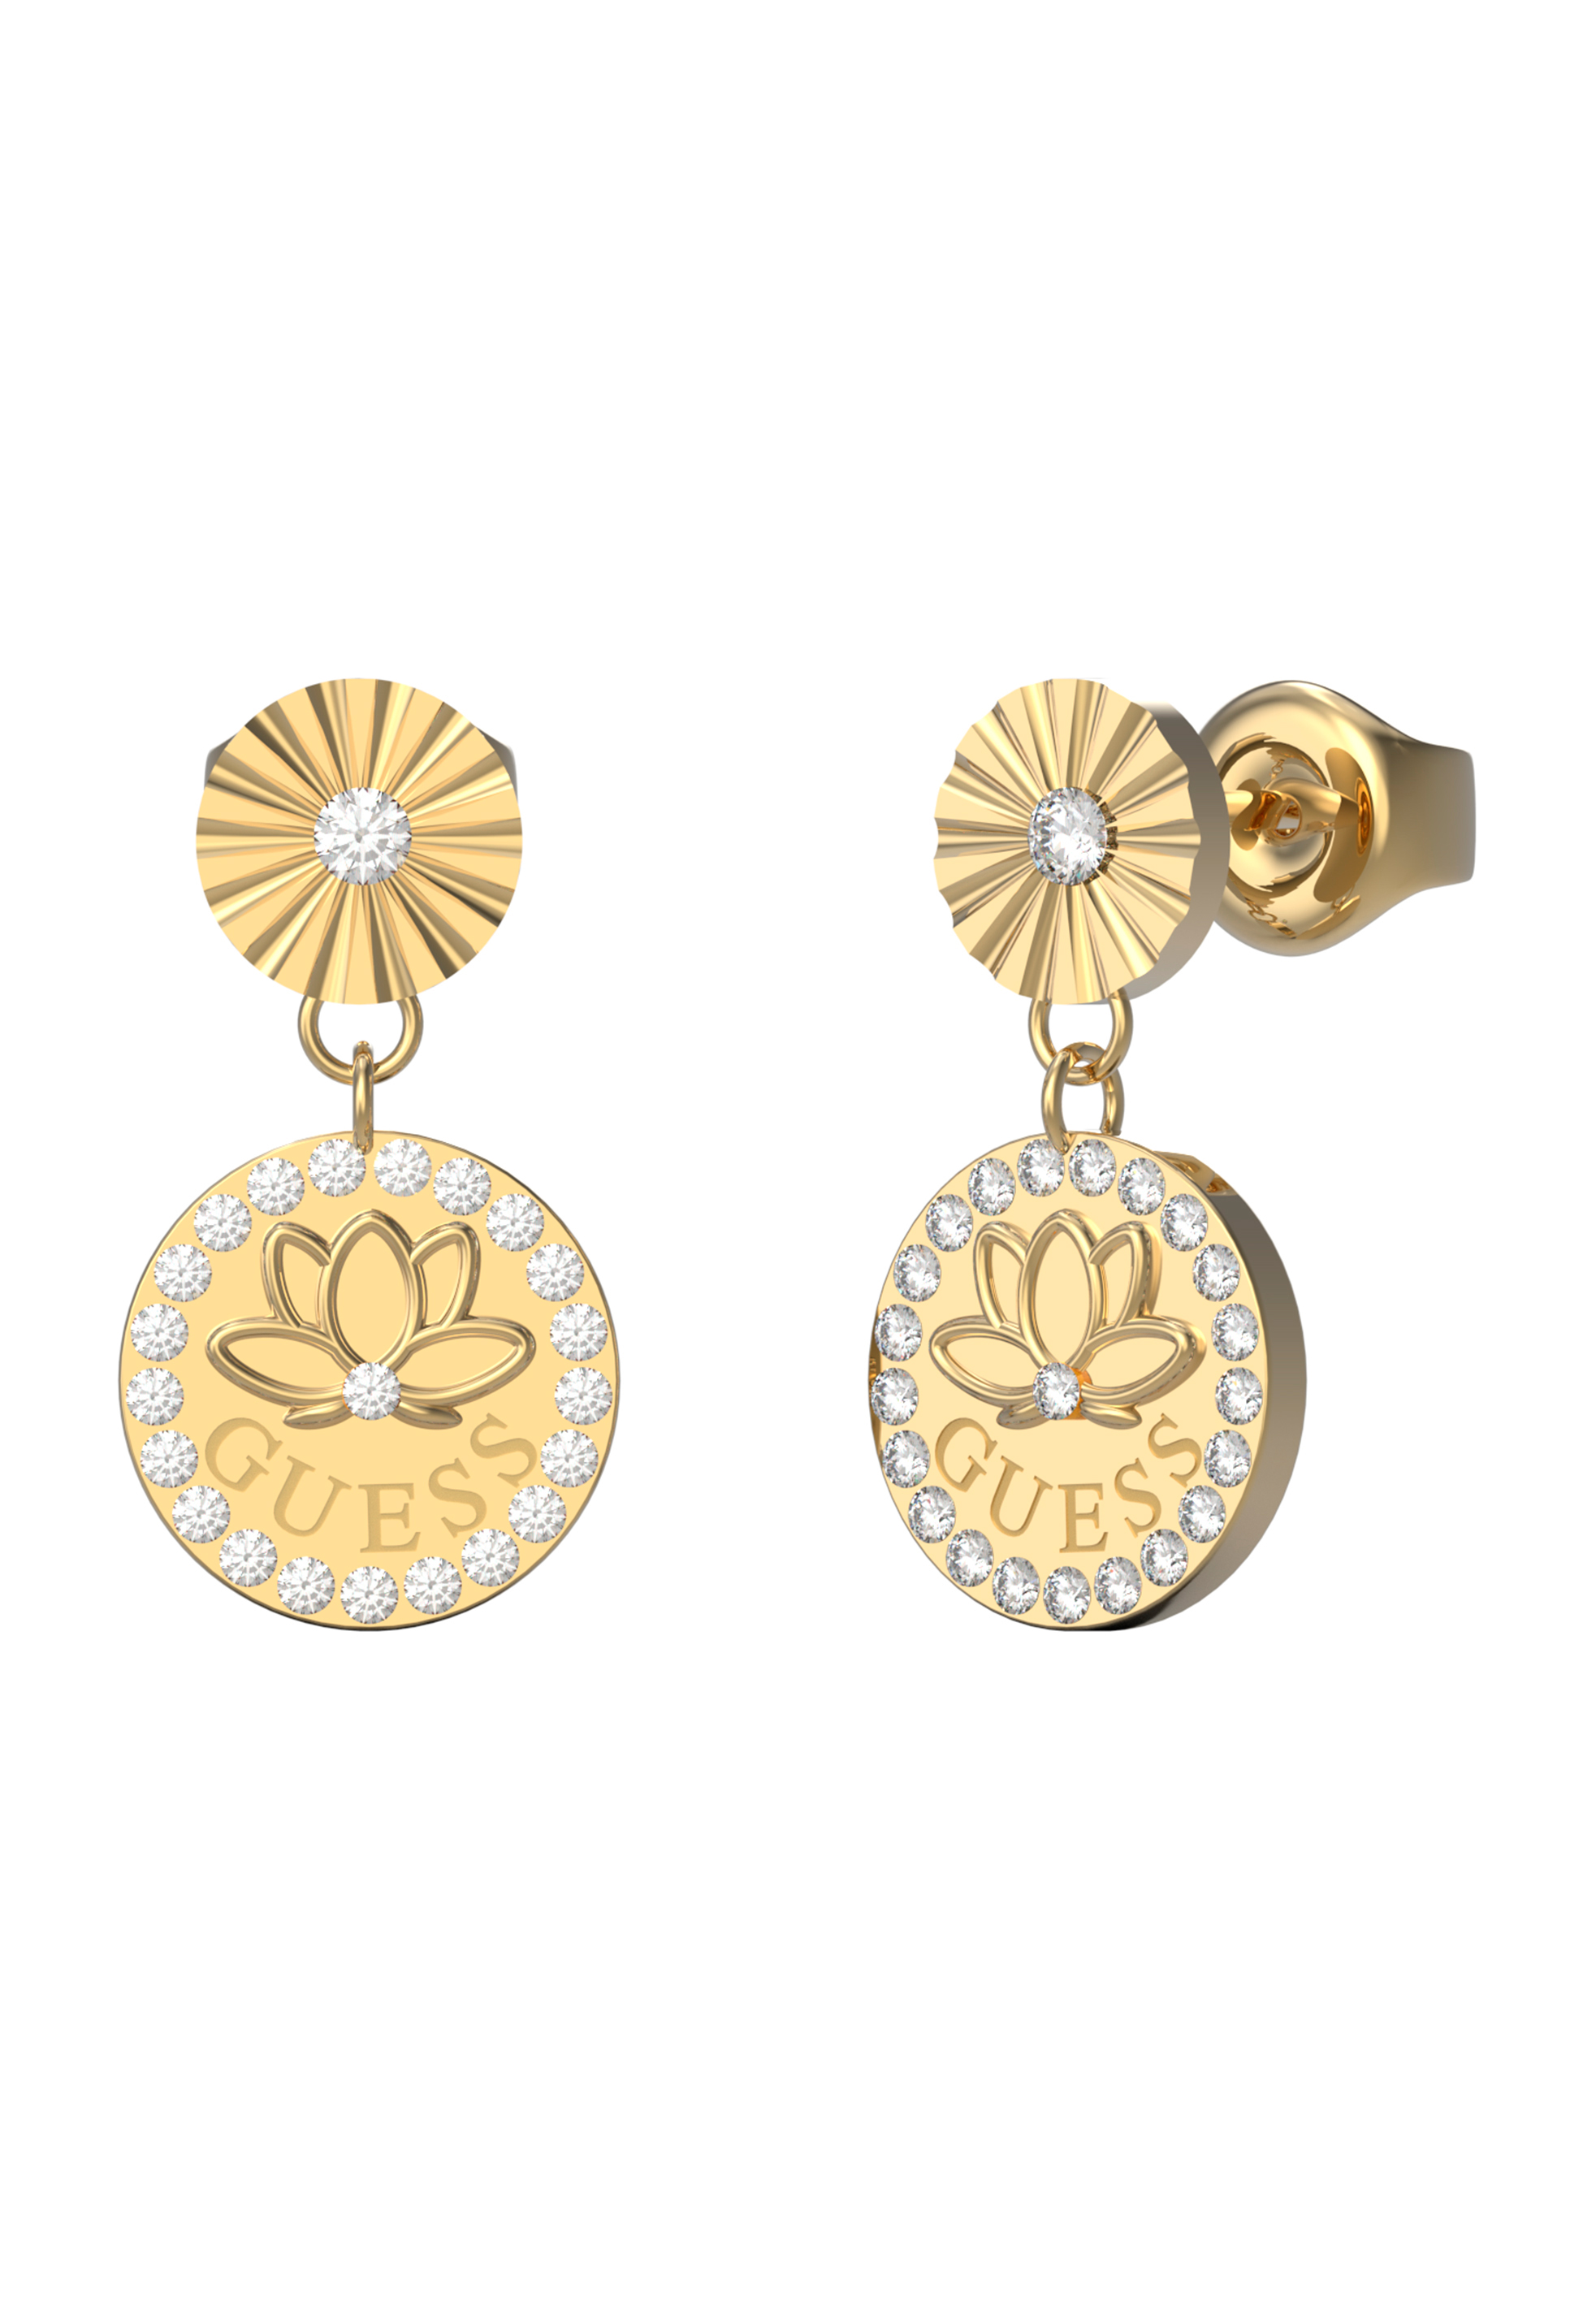 Guess Lotus Gold Drop Earrings - UBE01344YG